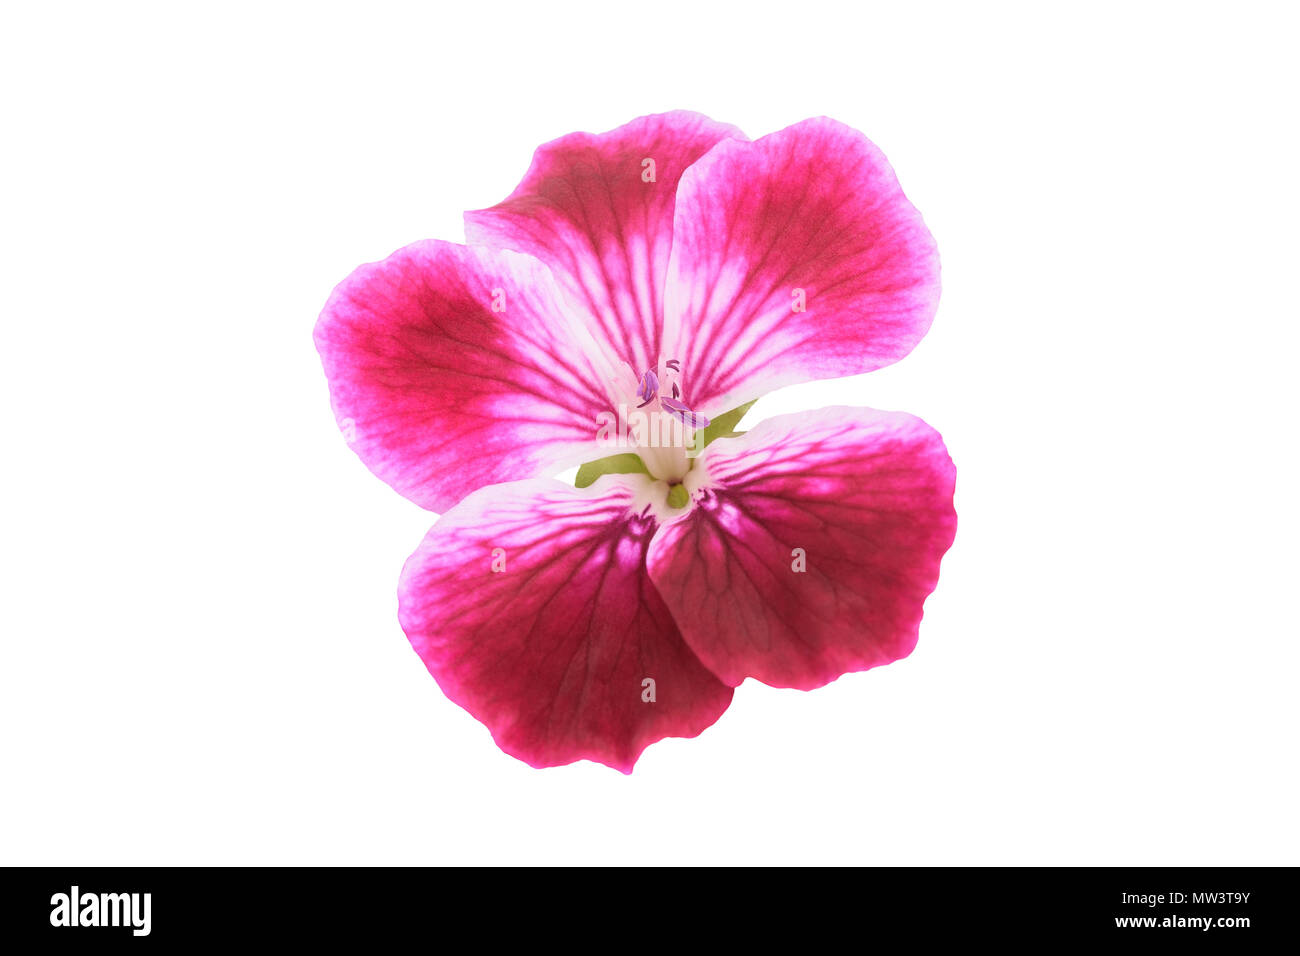 Geranium flower head isolated on white background Stock Photo